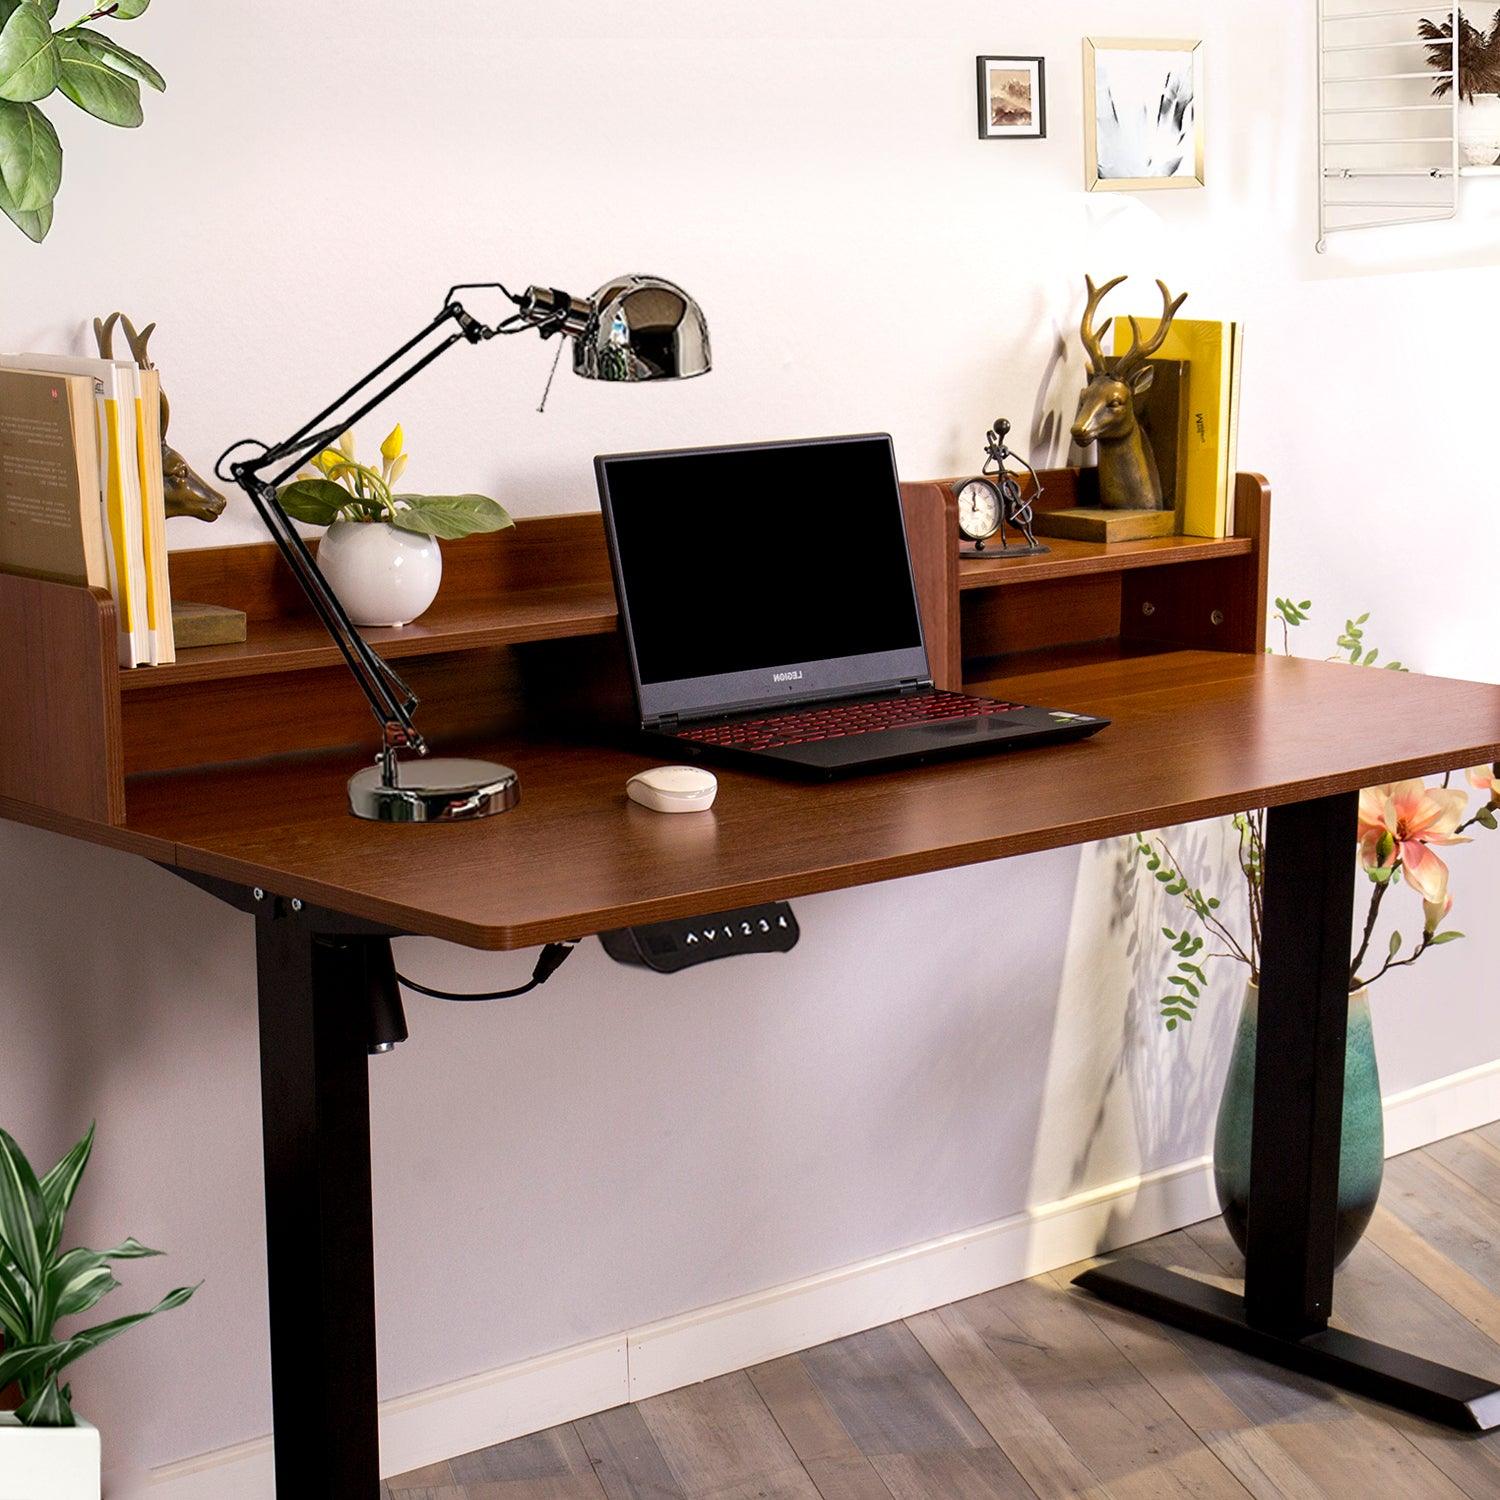 Electric Standing Desk-47x24 Inch-Black&Brown - Sinfinate